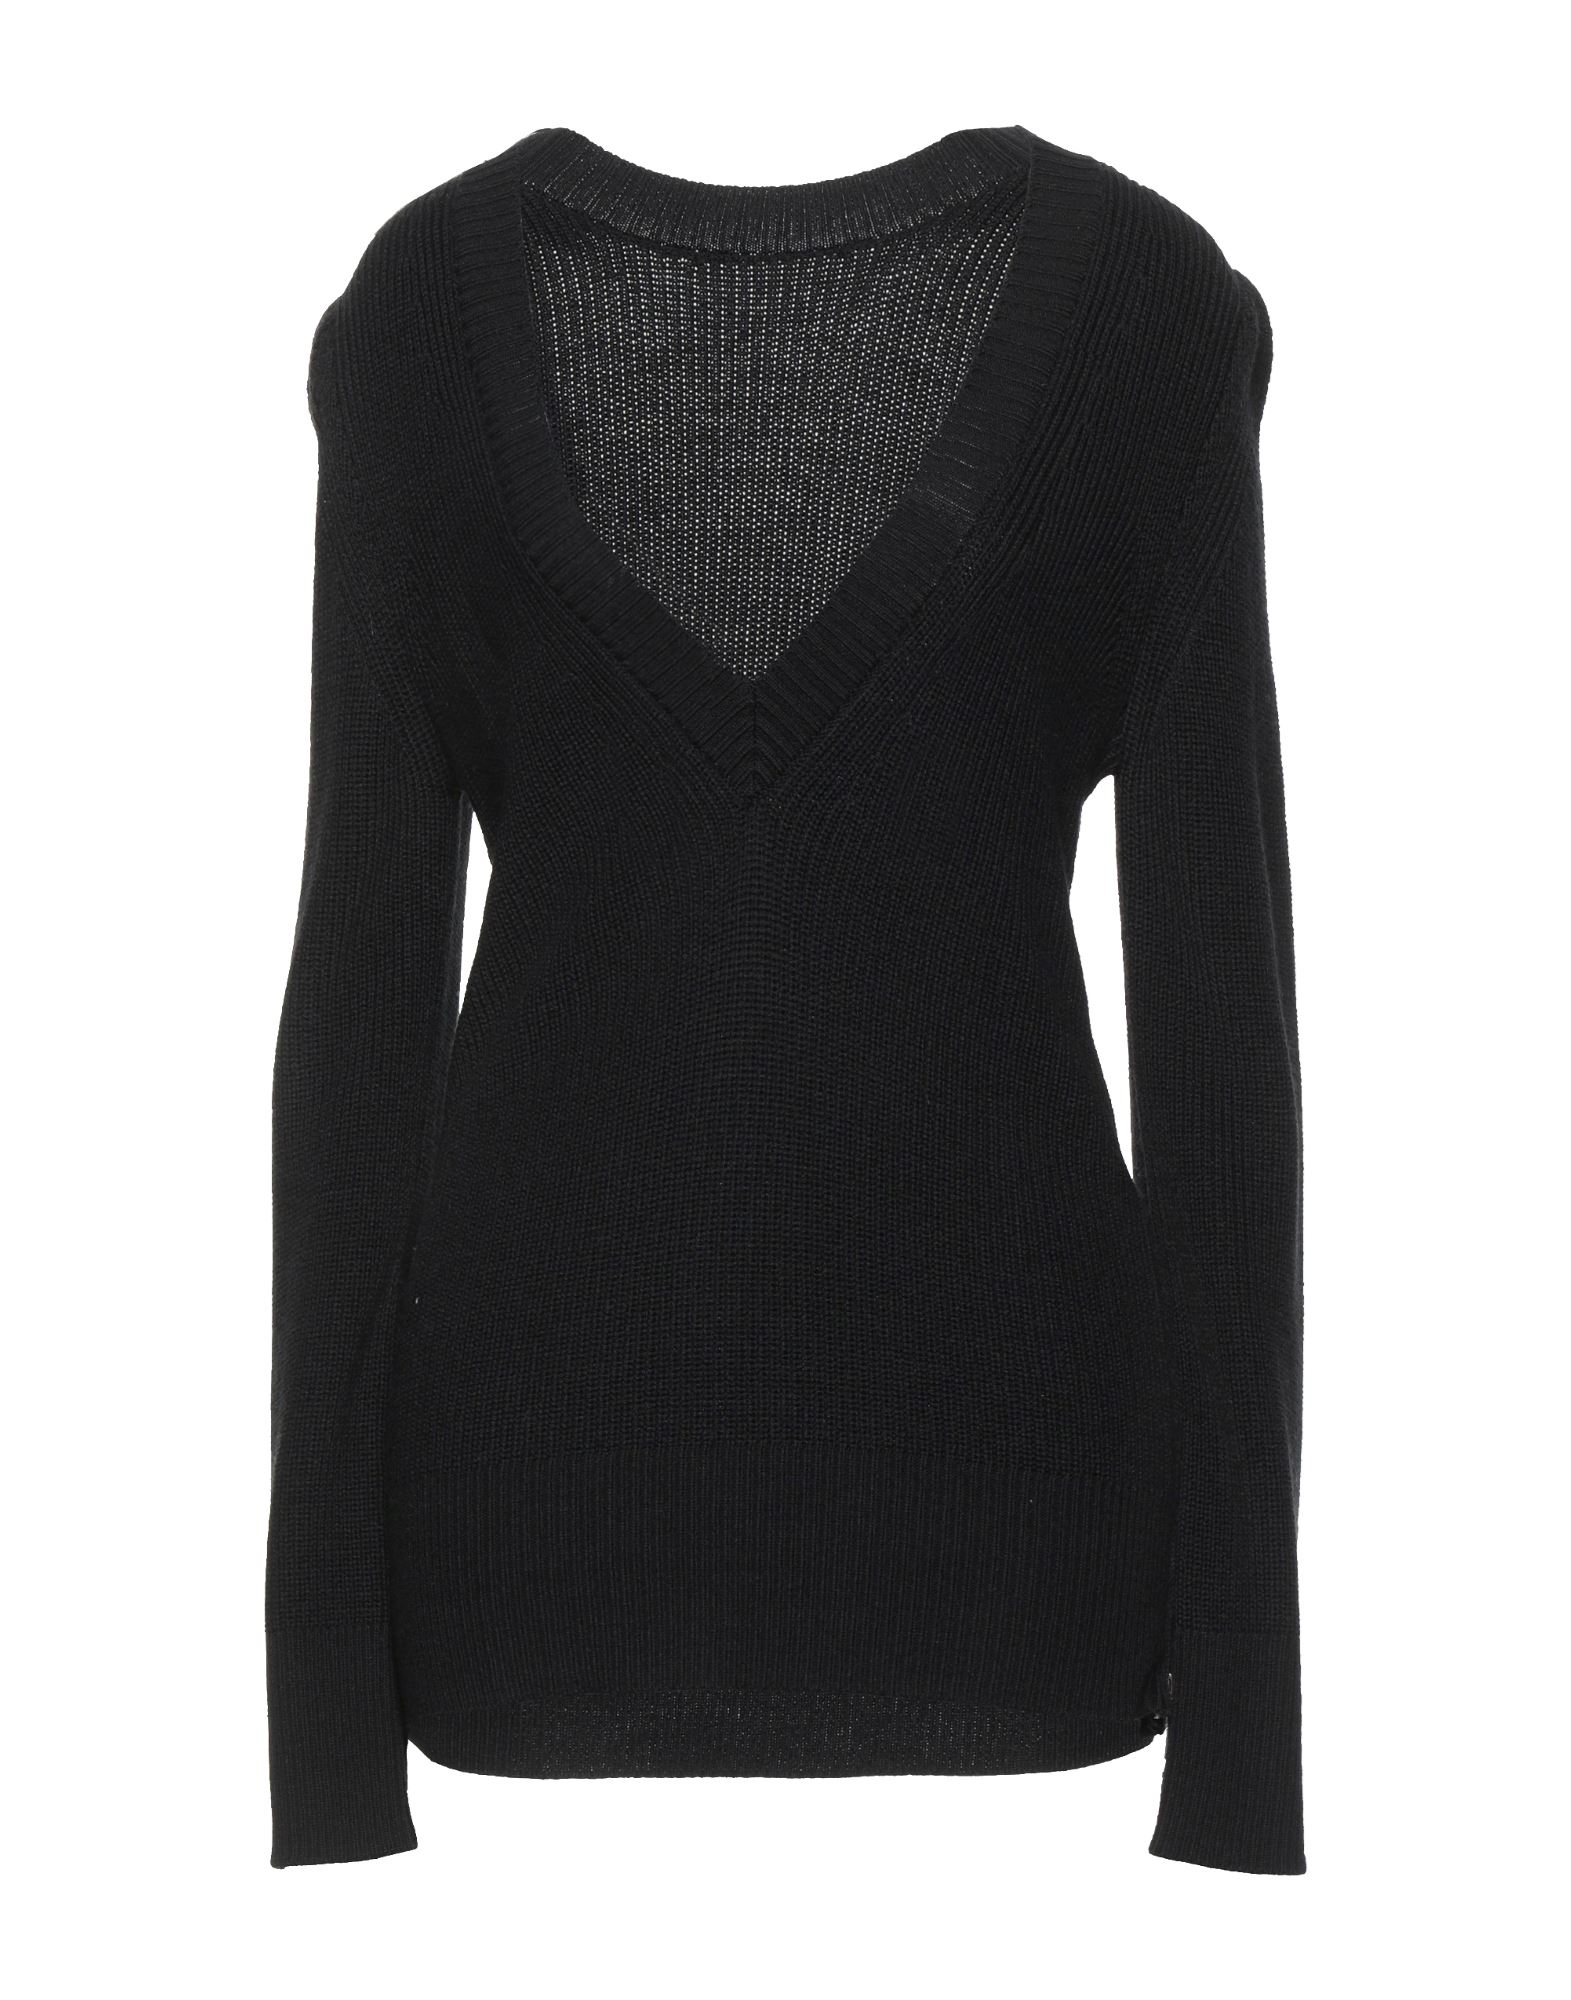 LIU JO Sweaters | Smart Closet